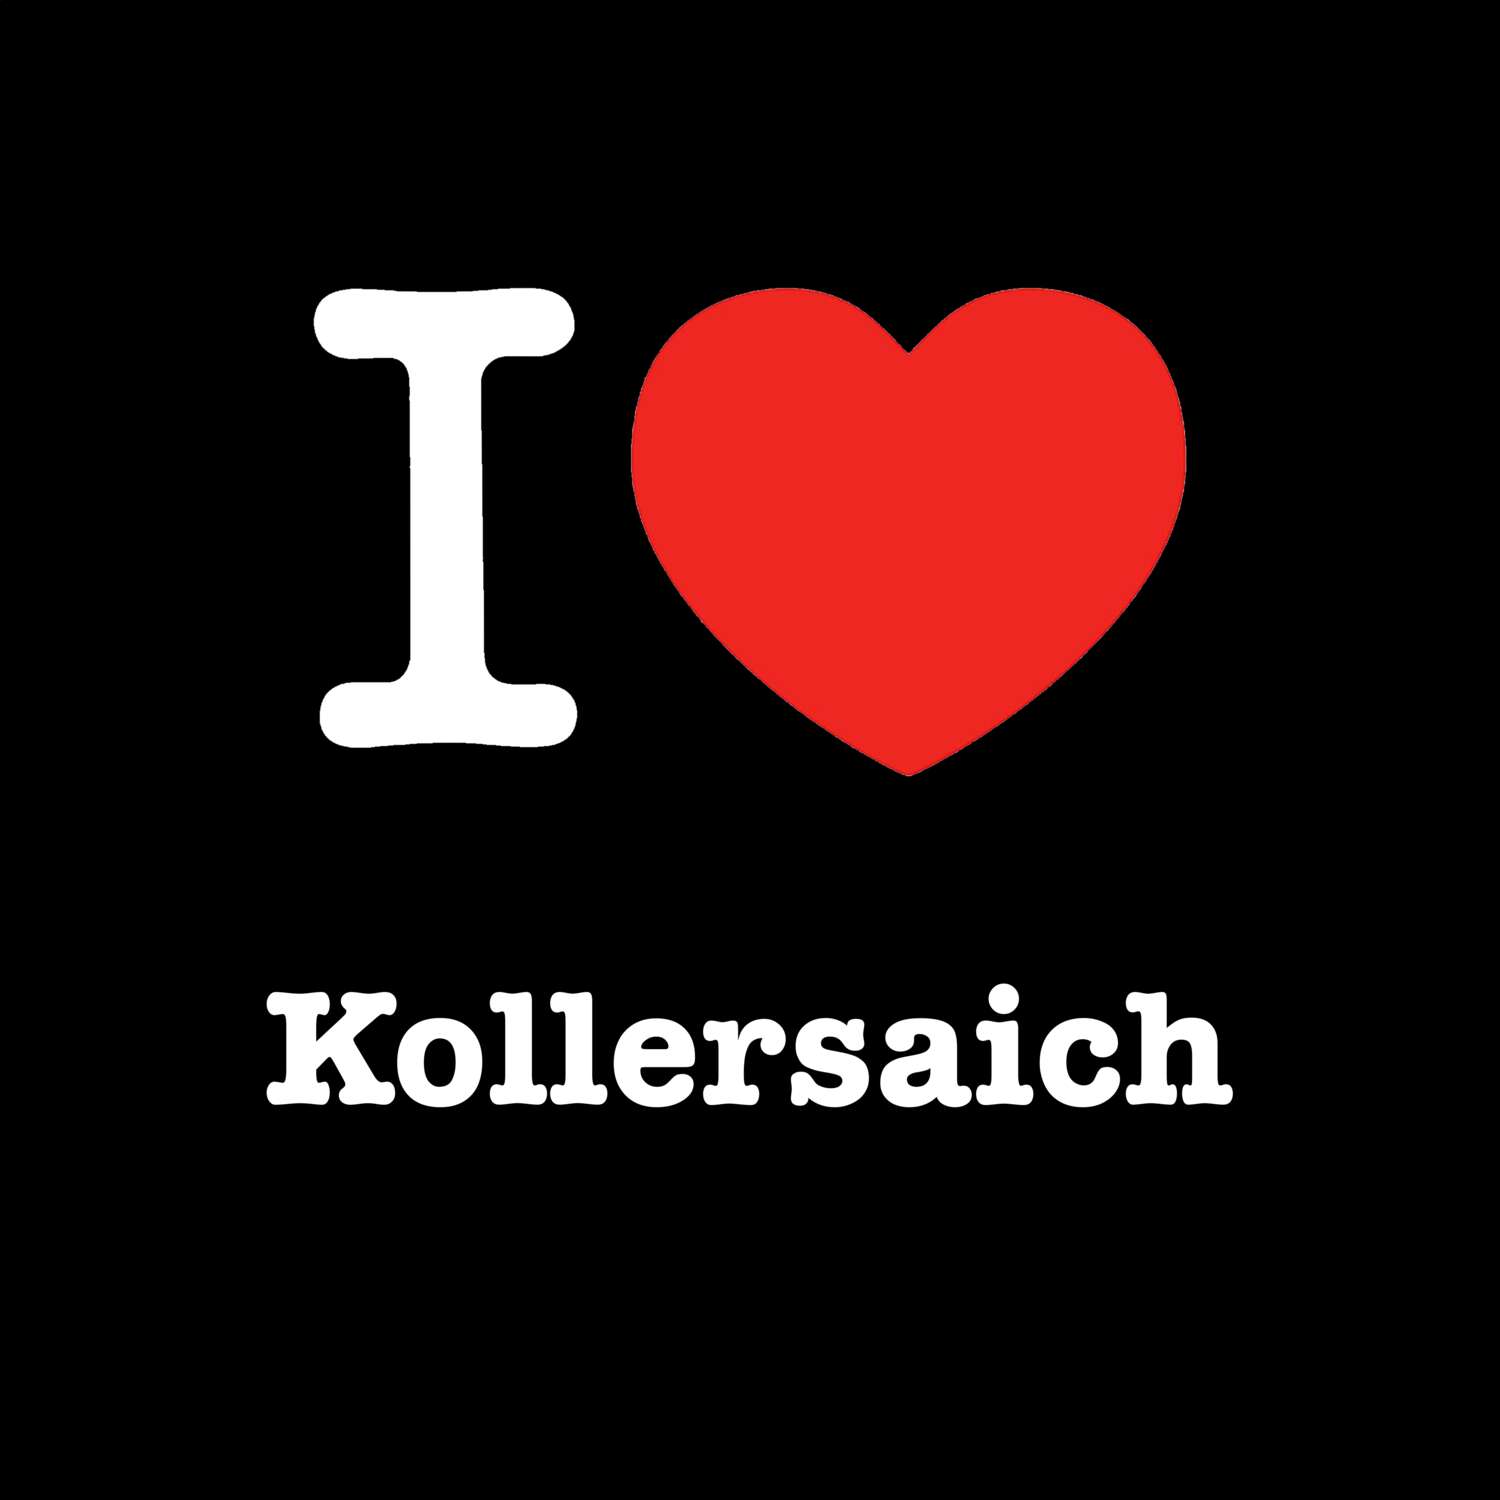 Kollersaich T-Shirt »I love«